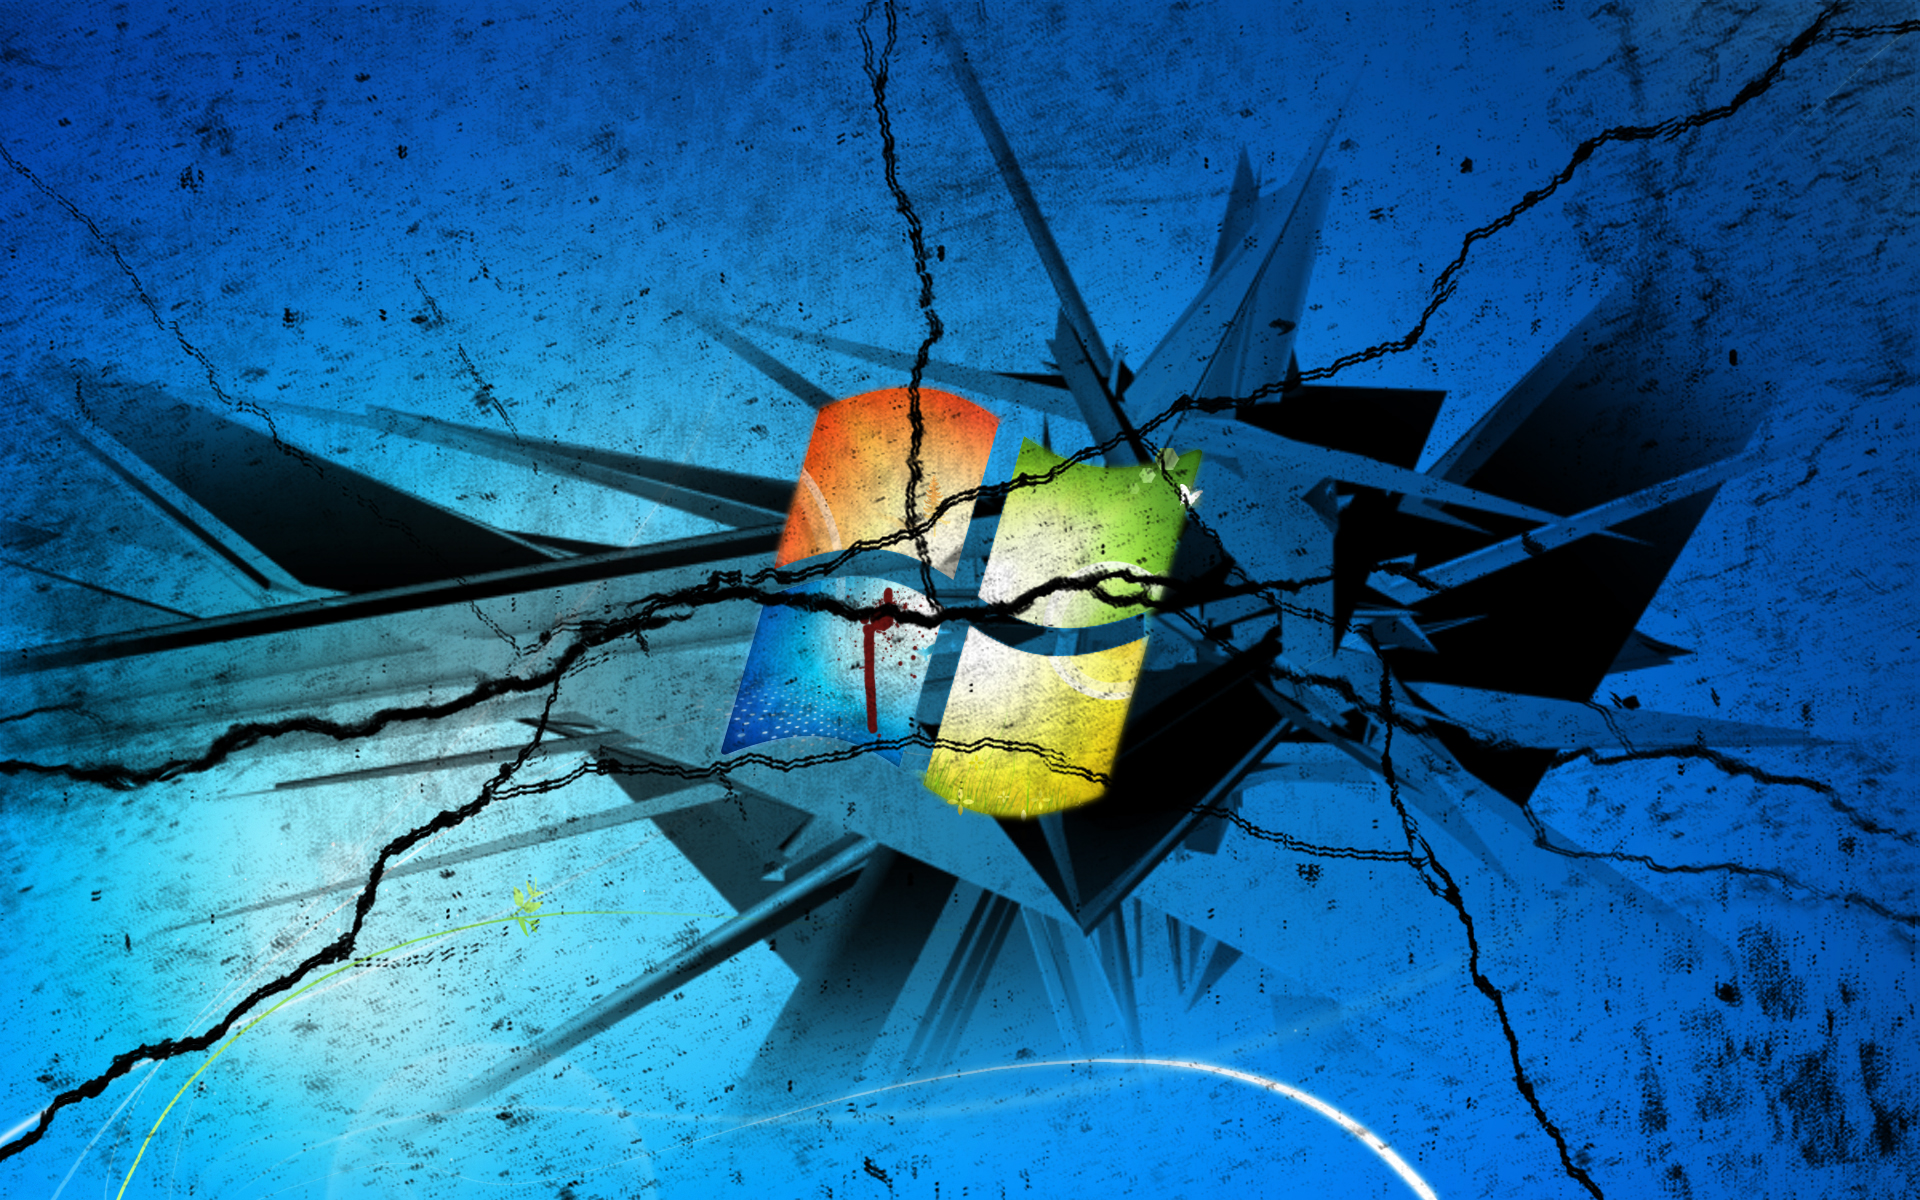 [46+] Broken Windows 7 Wallpaper | WallpaperSafari.com